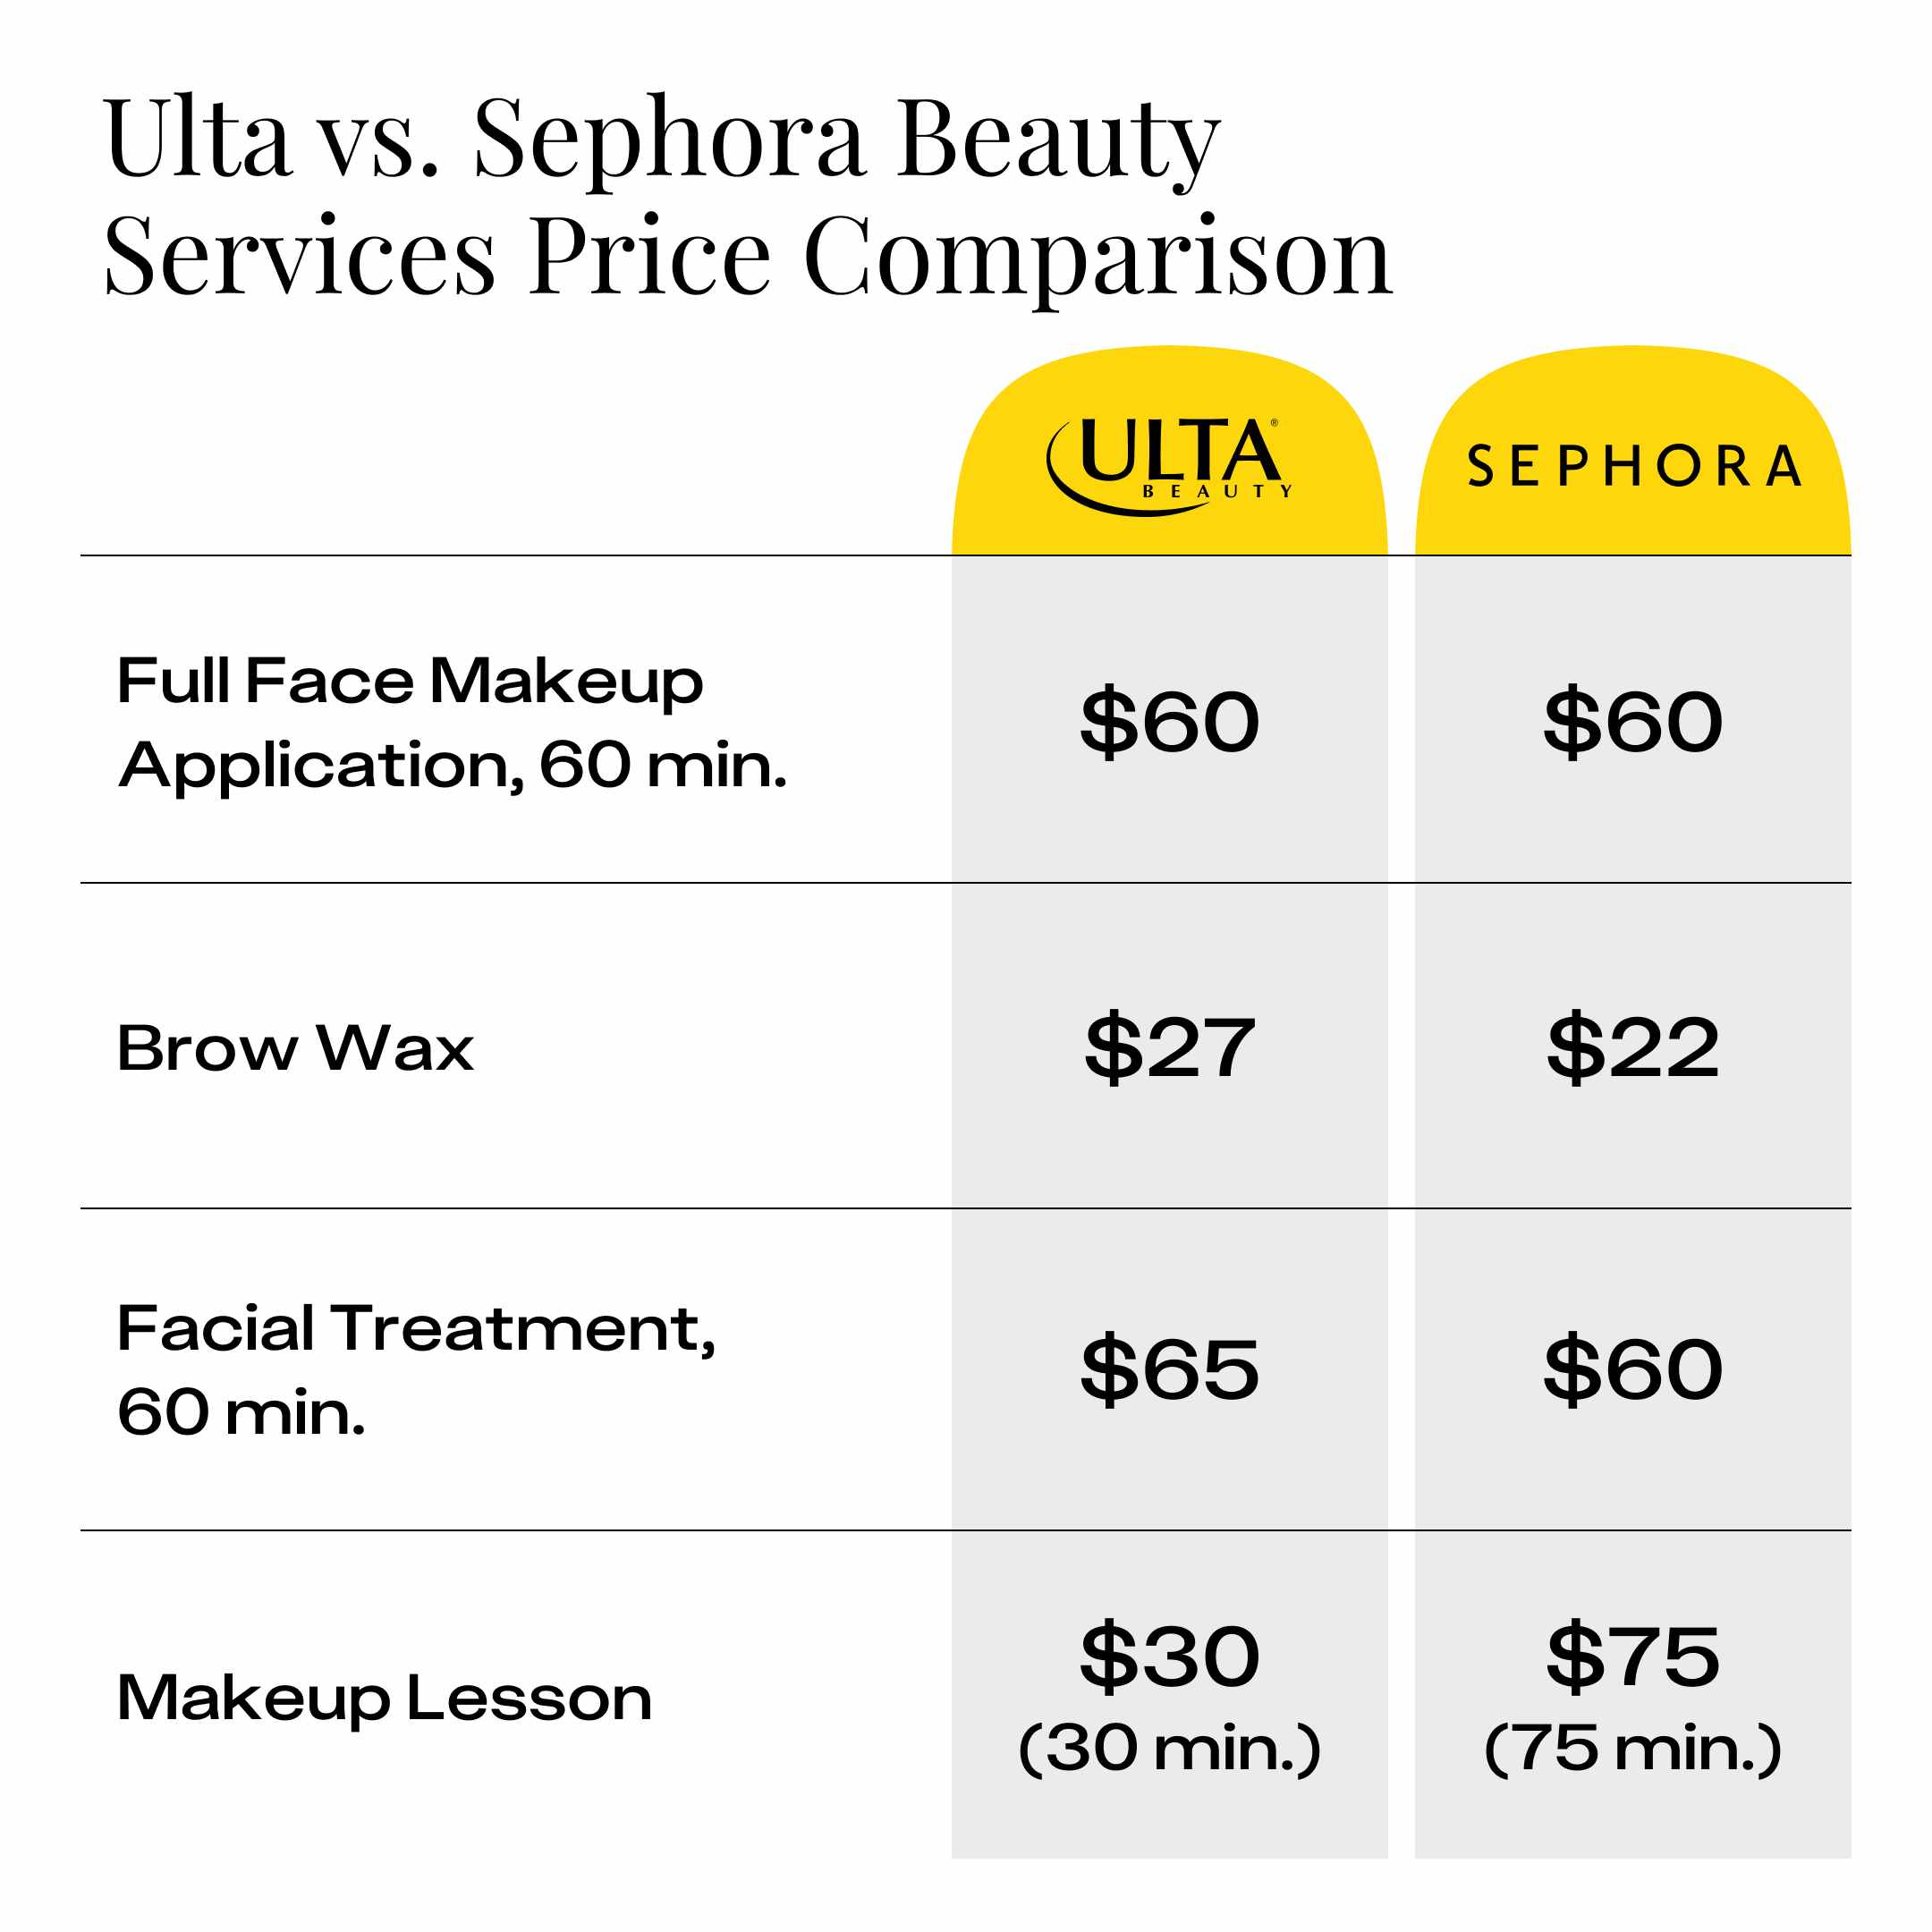 Ulta vs. Sephora Beauty Services Price Comparison